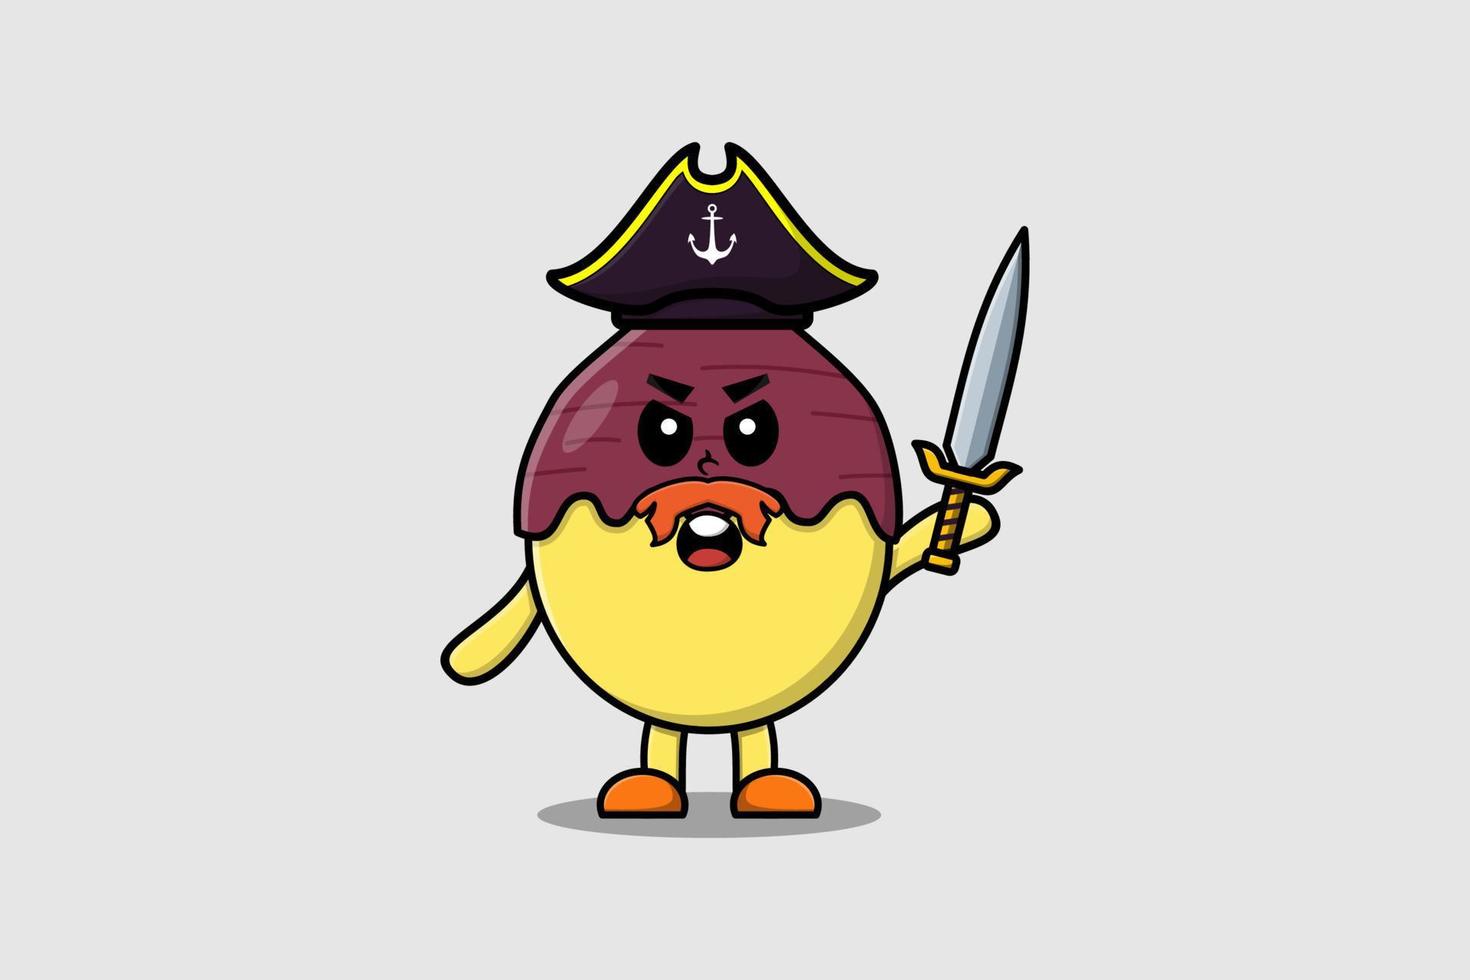 Cute cartoon Sweet potato pirate holding sword vector